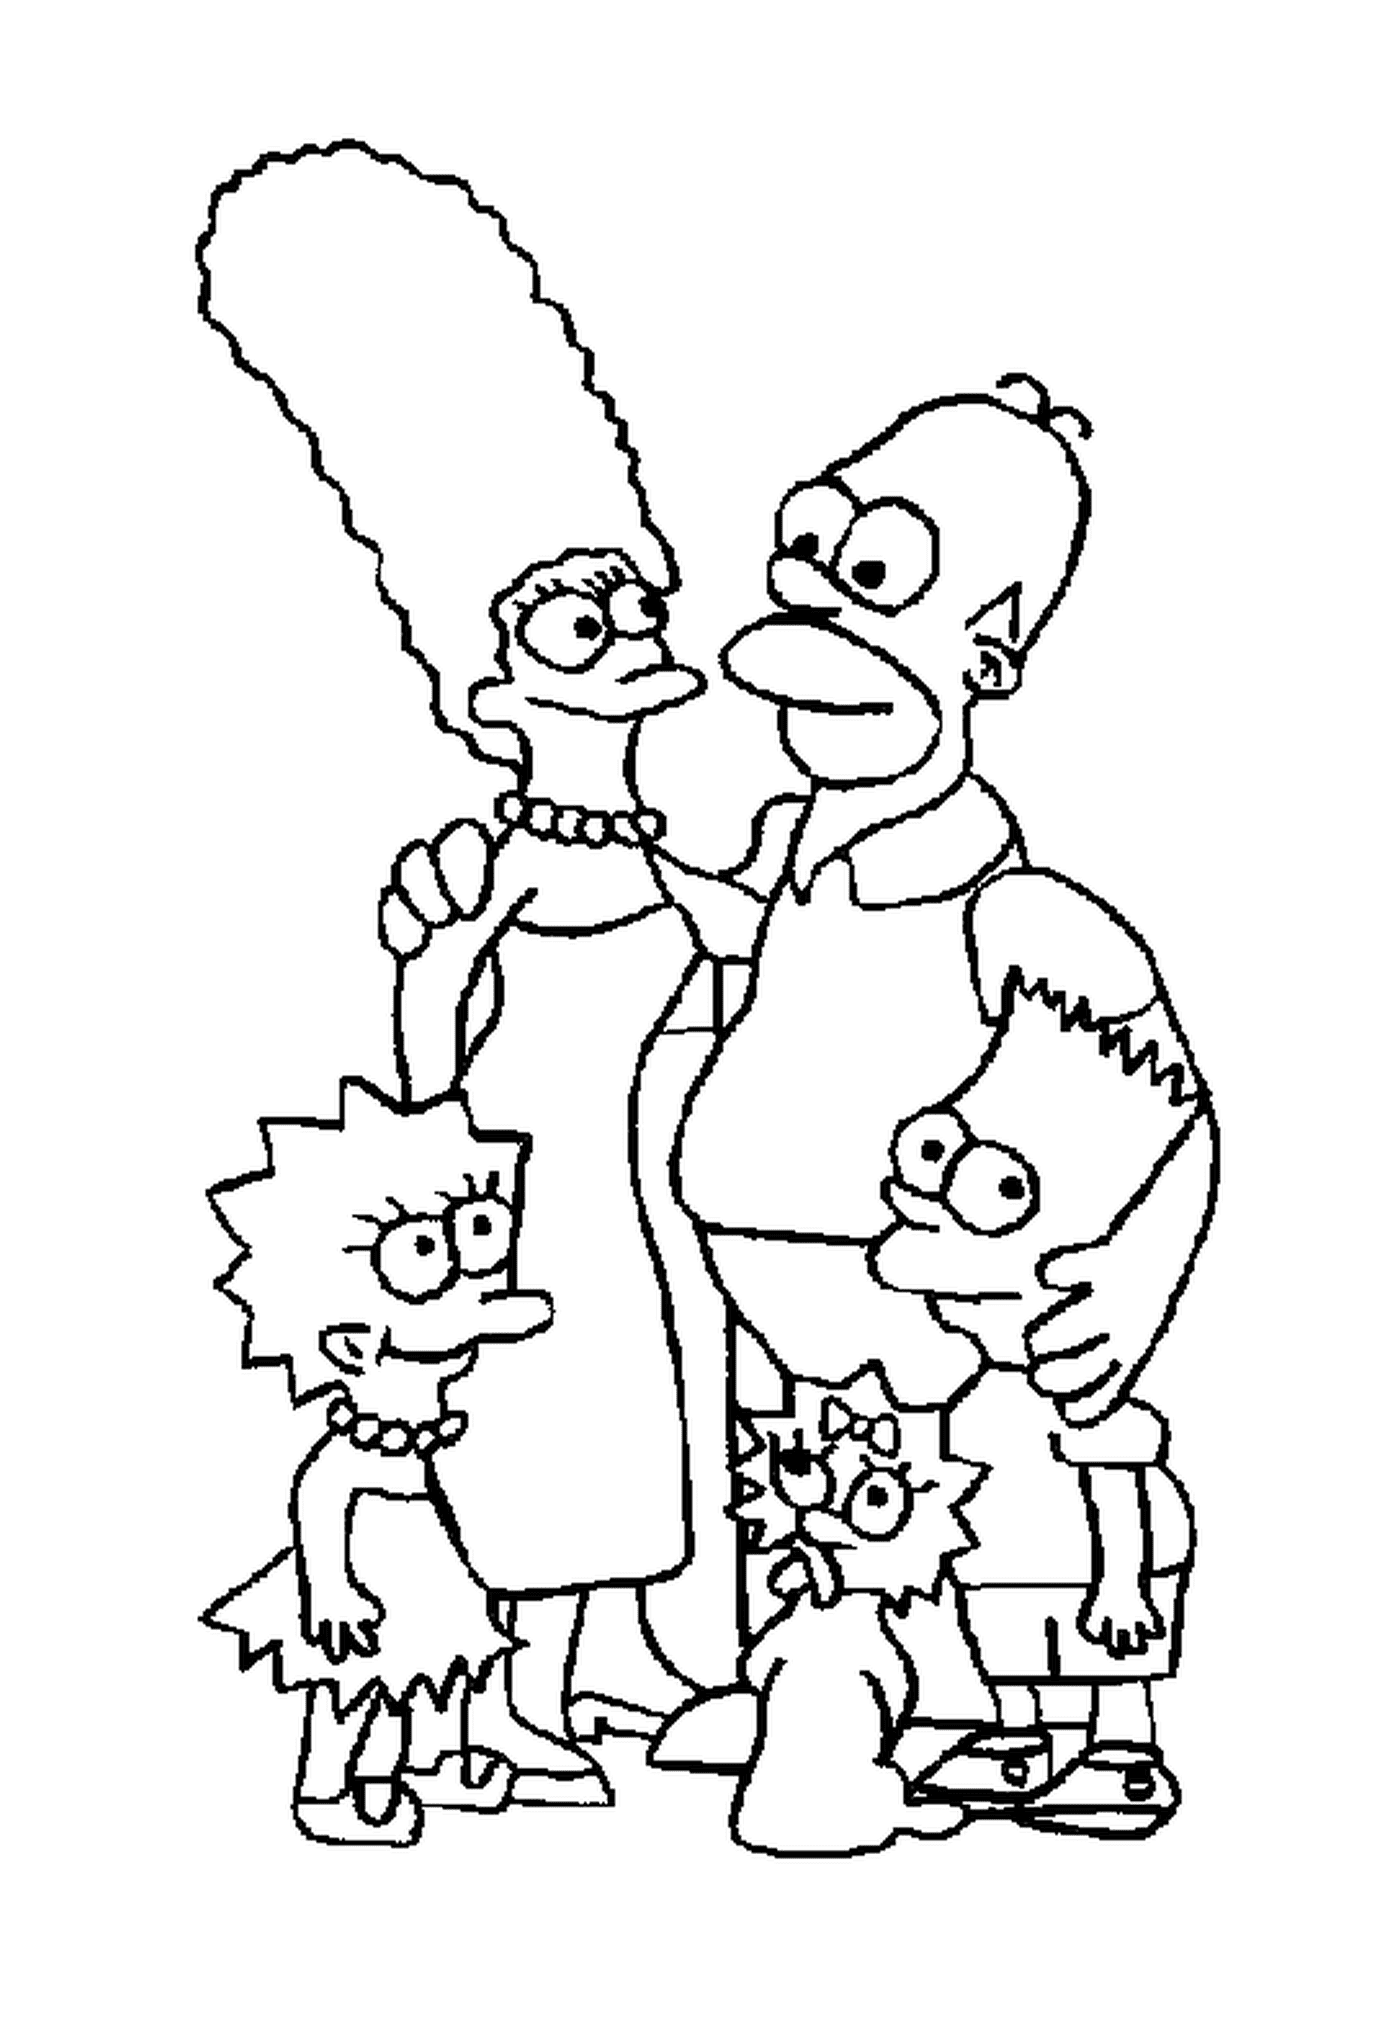  A família Simpson está reunida 